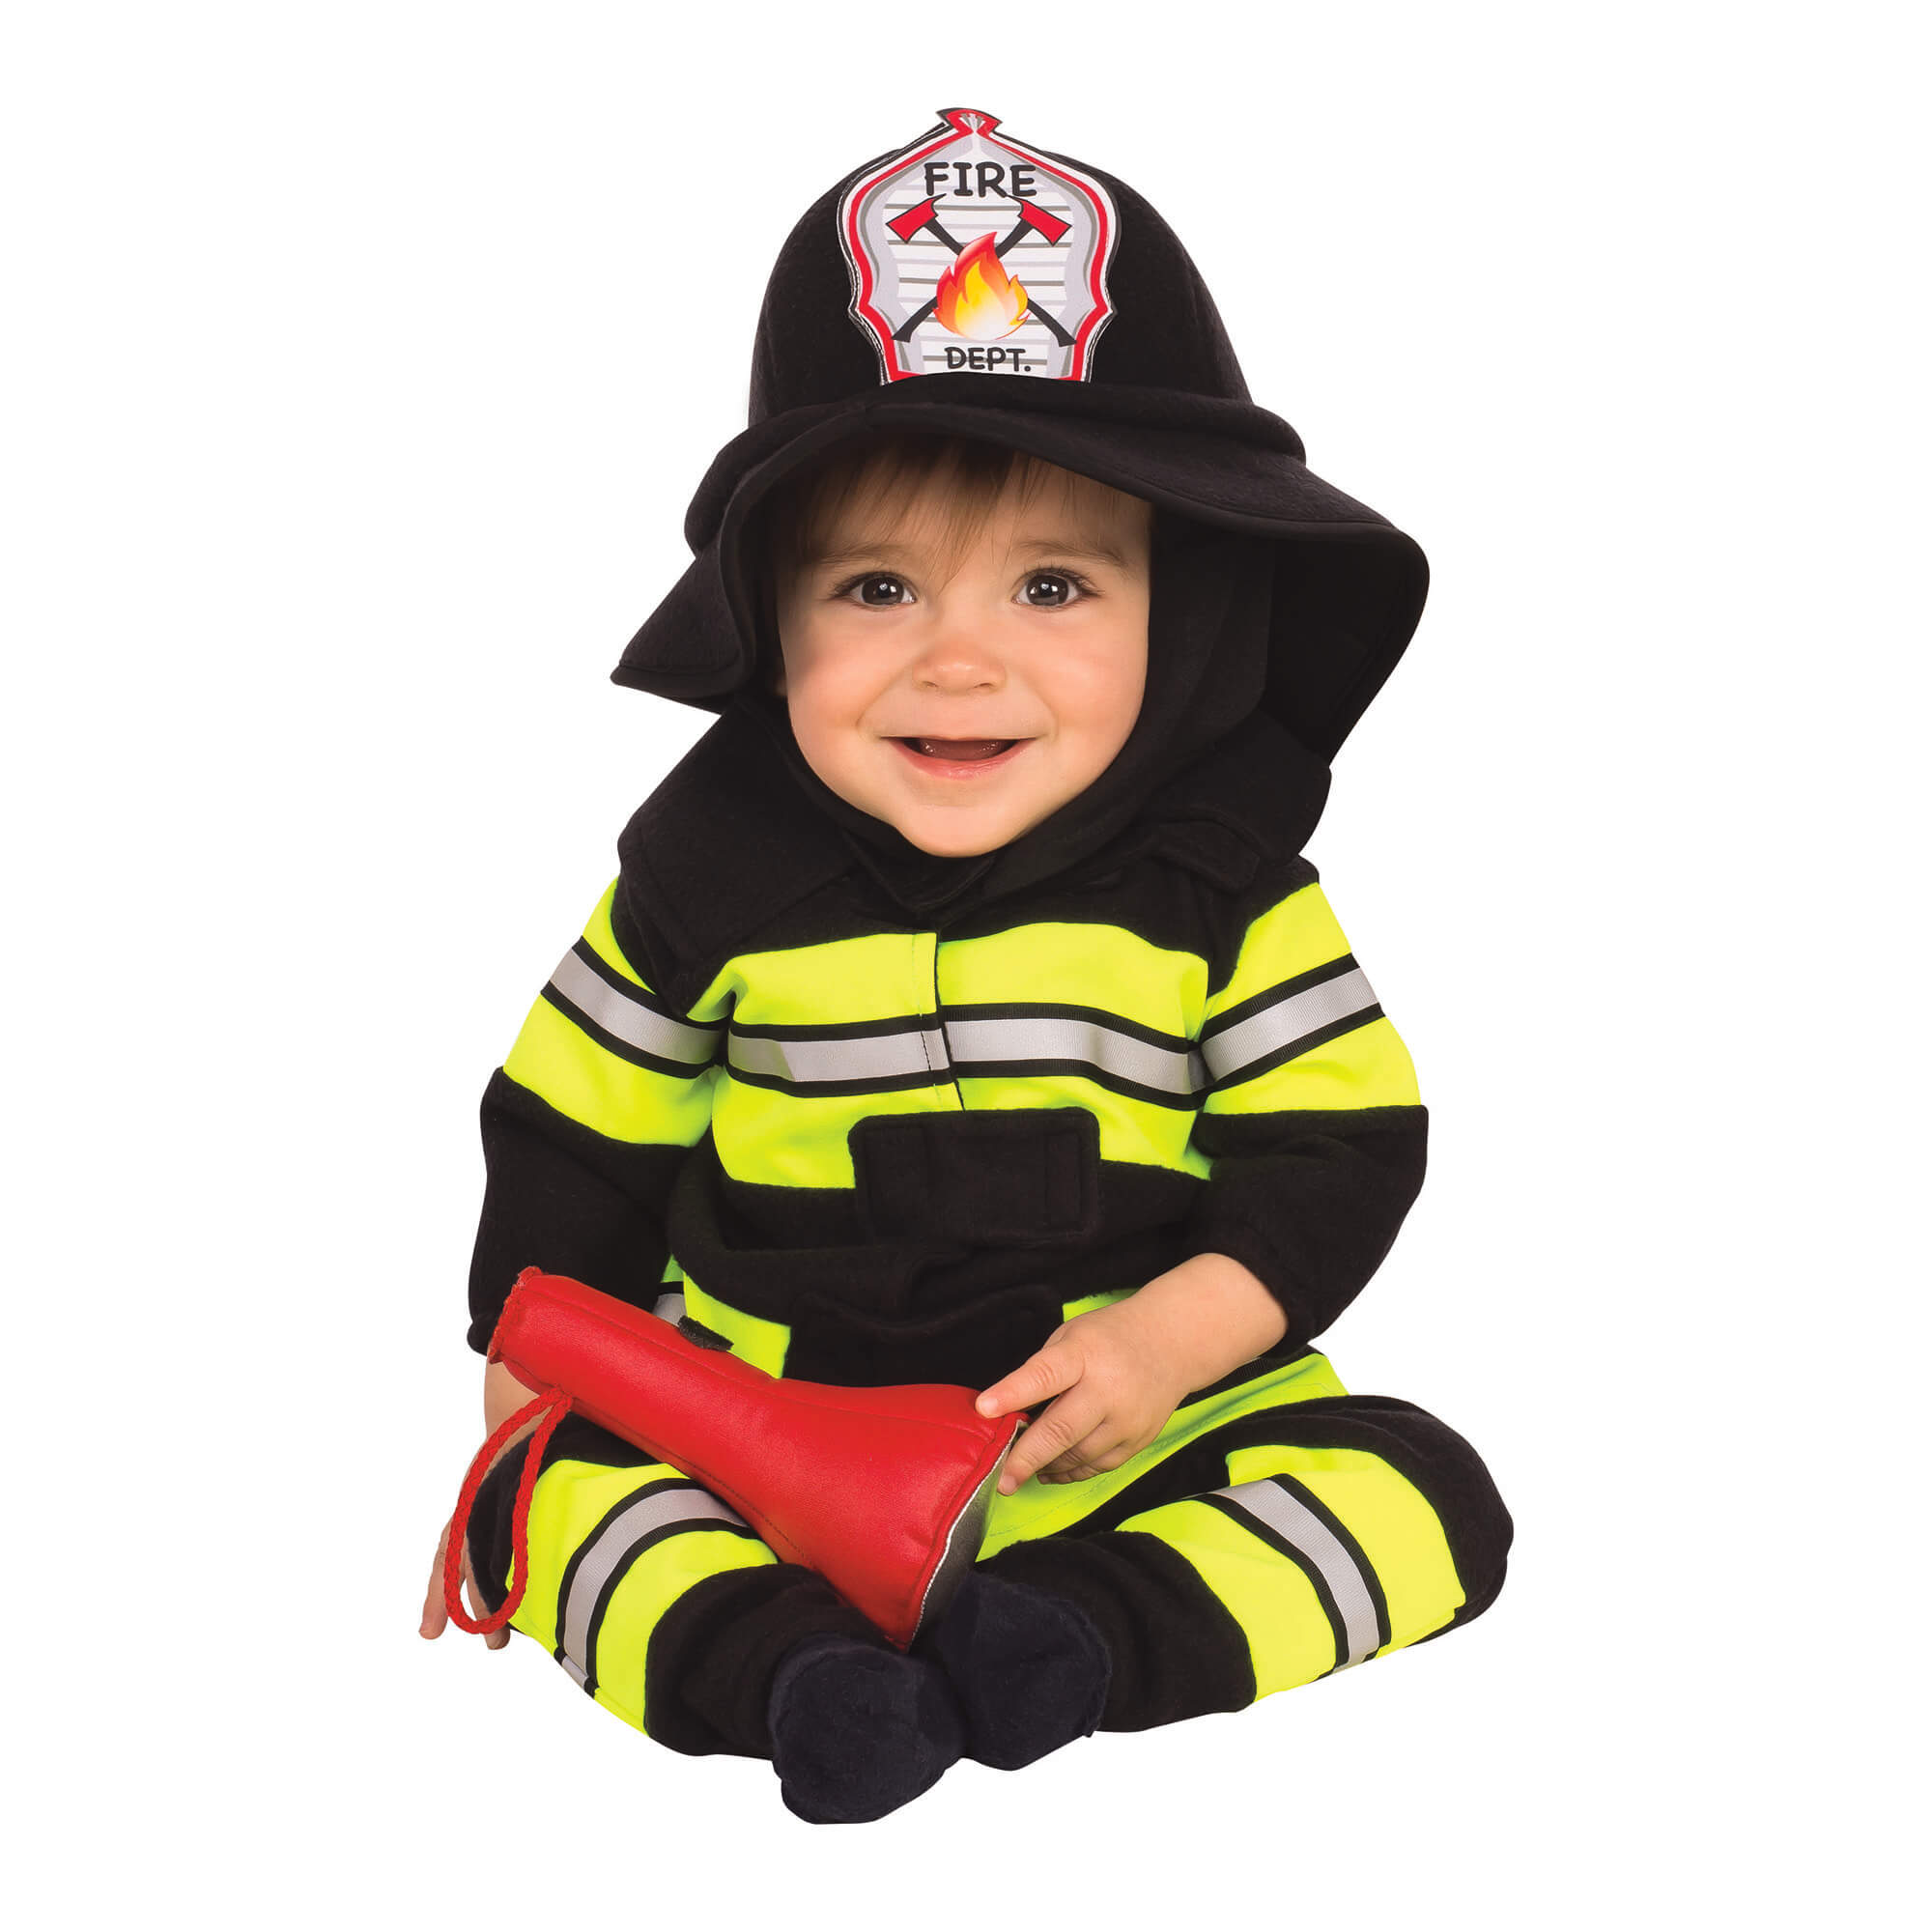 Rubies Fireman Infant Costume